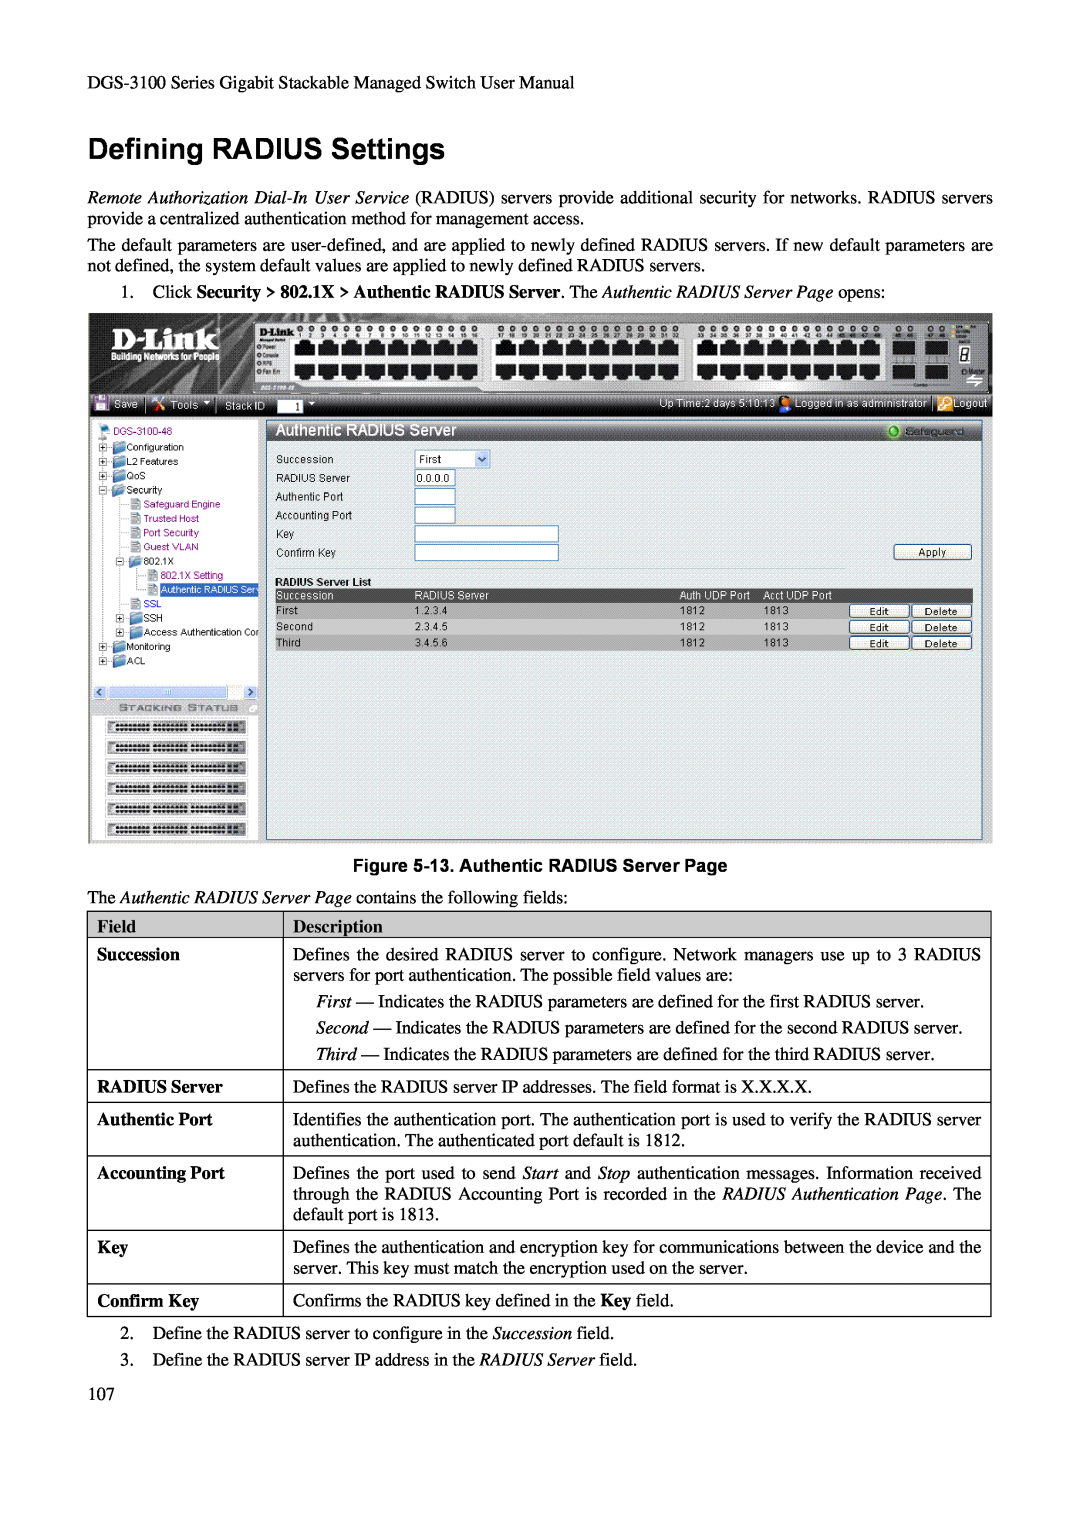 D-Link DGS-3100 user manual Defining RADIUS Settings, 13. Authentic RADIUS Server Page, Confirm Key, Description 